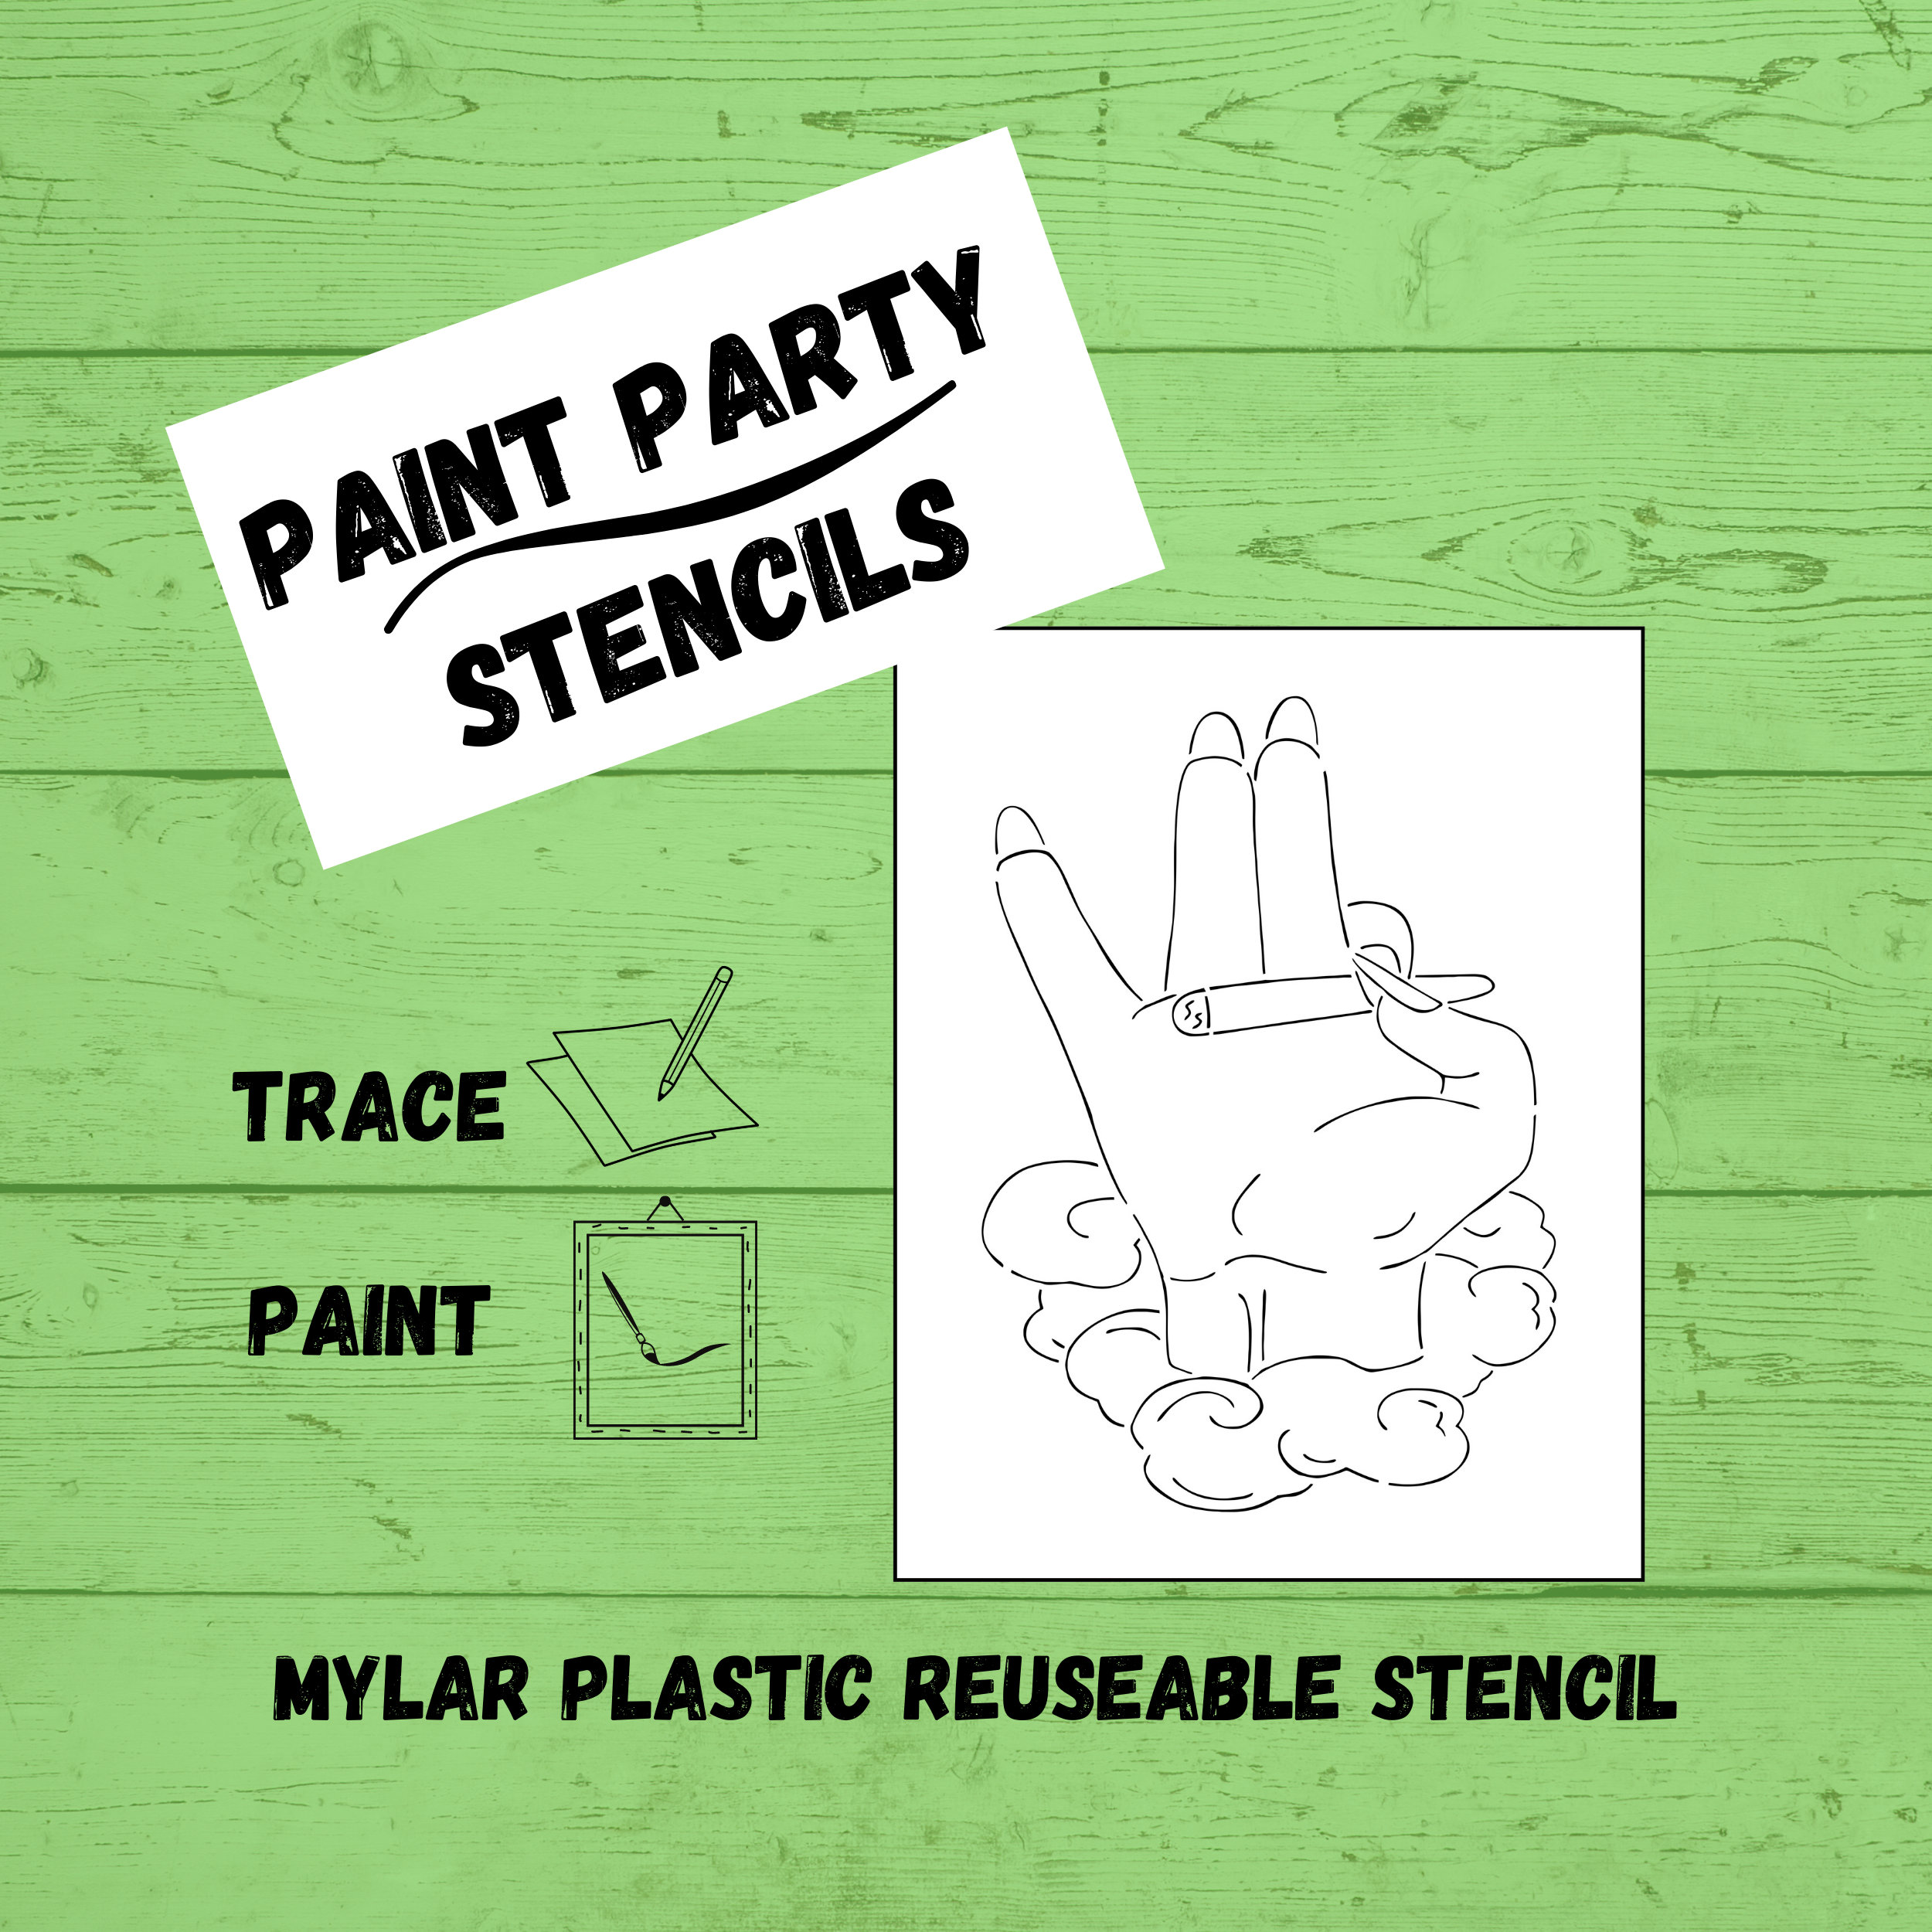 Reusable Stencil for Paint Parties Mardi Gras For 11x14/16x20 Canvas 14 MIL Mylar Plastic